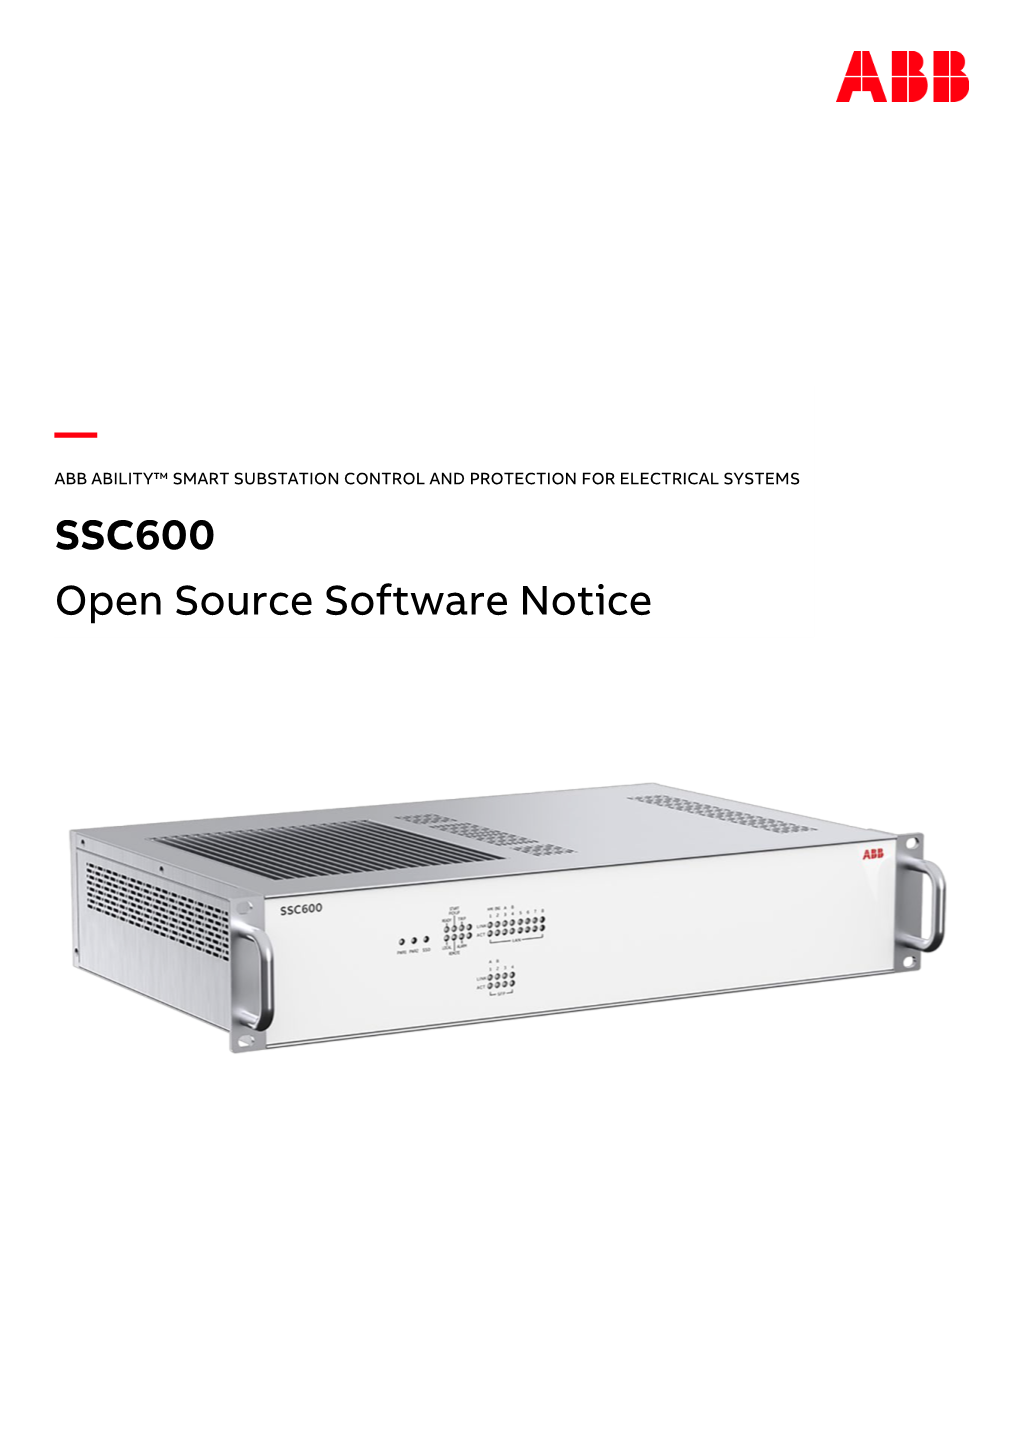 — SSC600 Open Source Software Notice